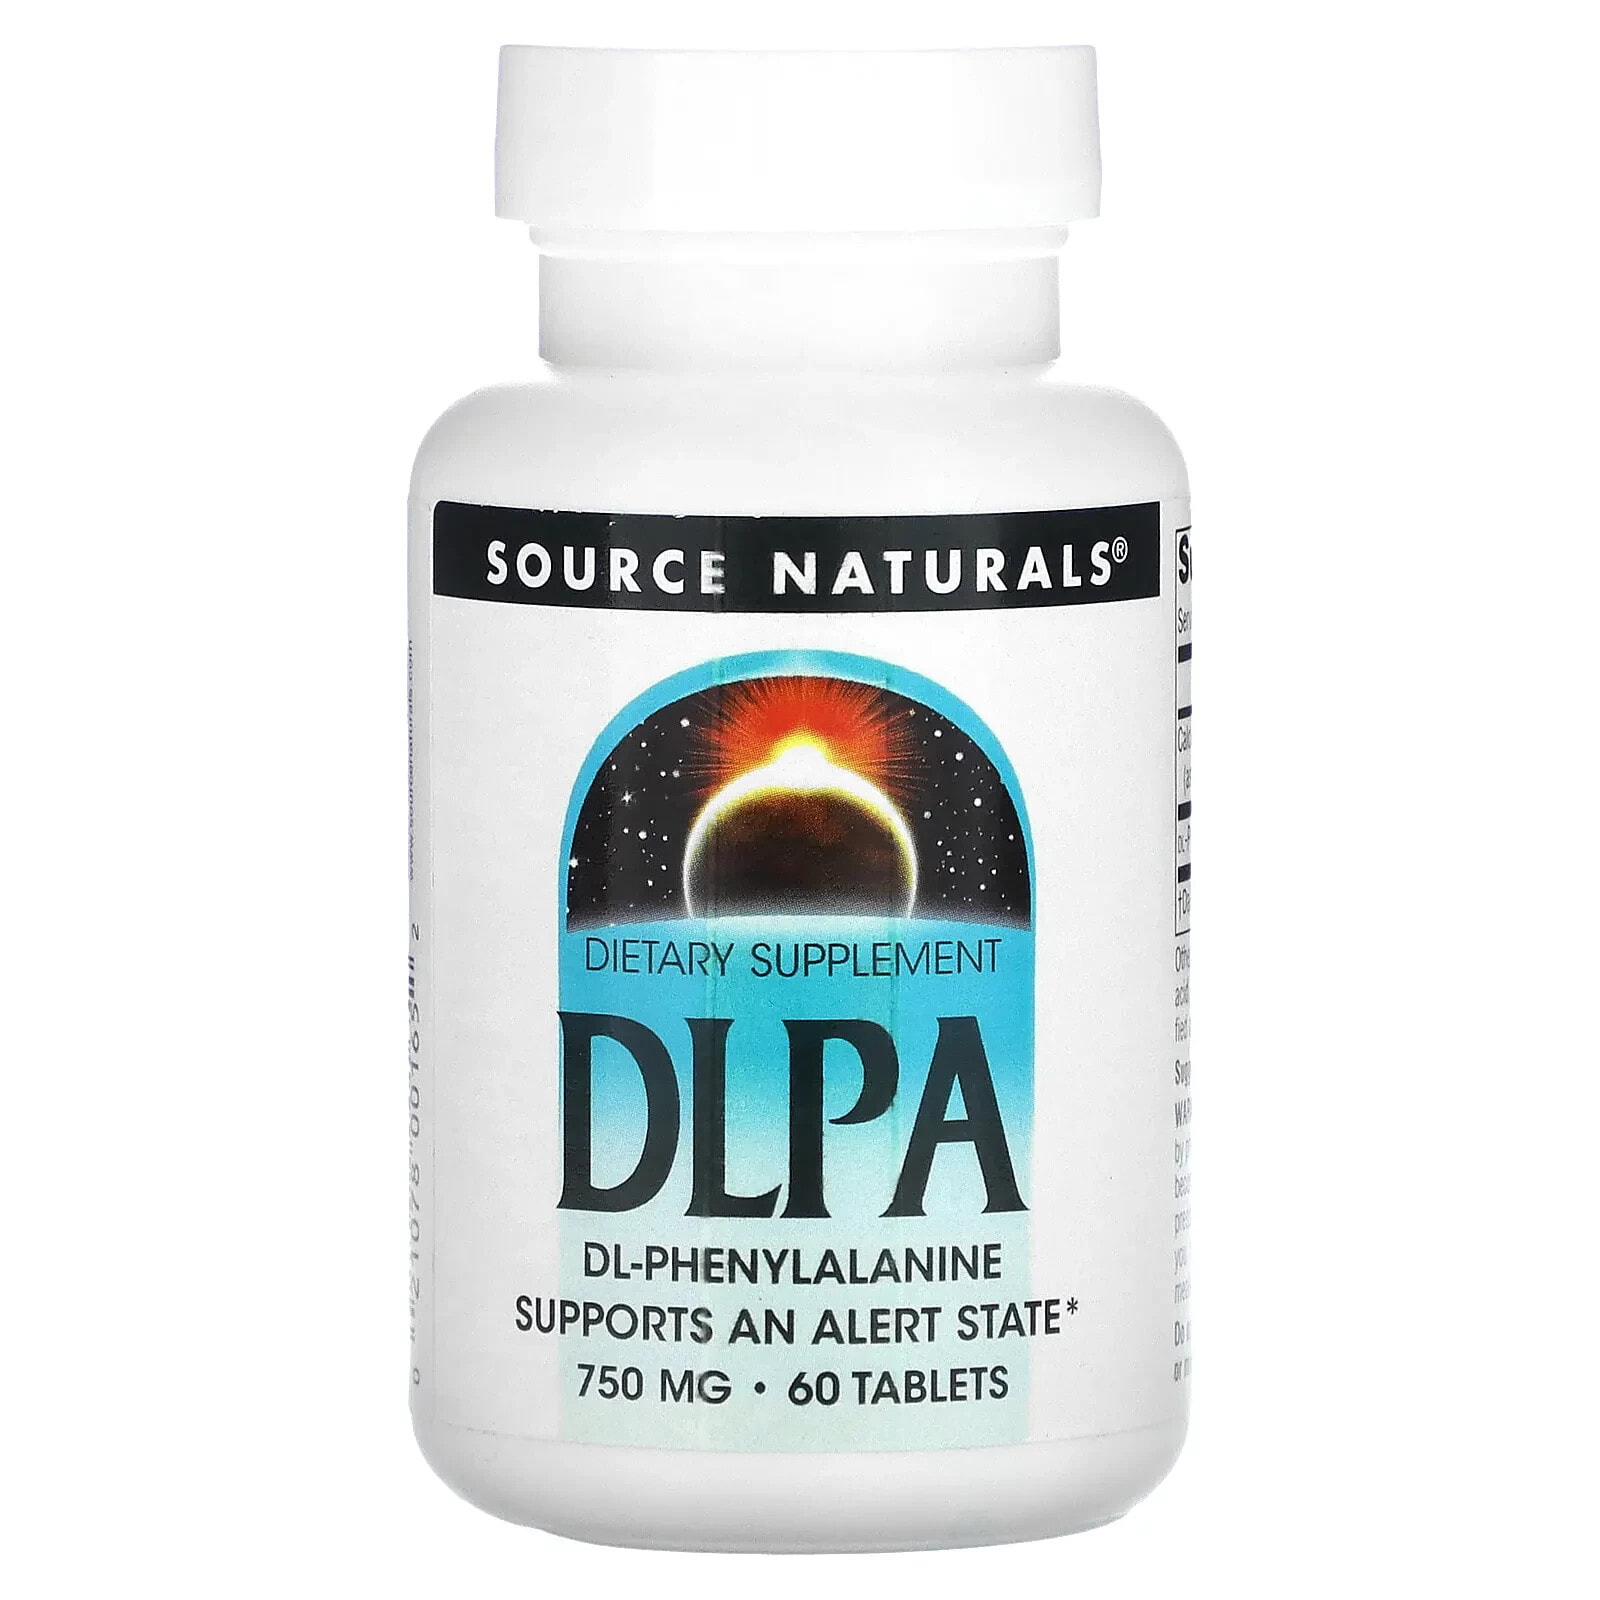 Source Naturals, DLPA, 375 мг, 120 таблеток